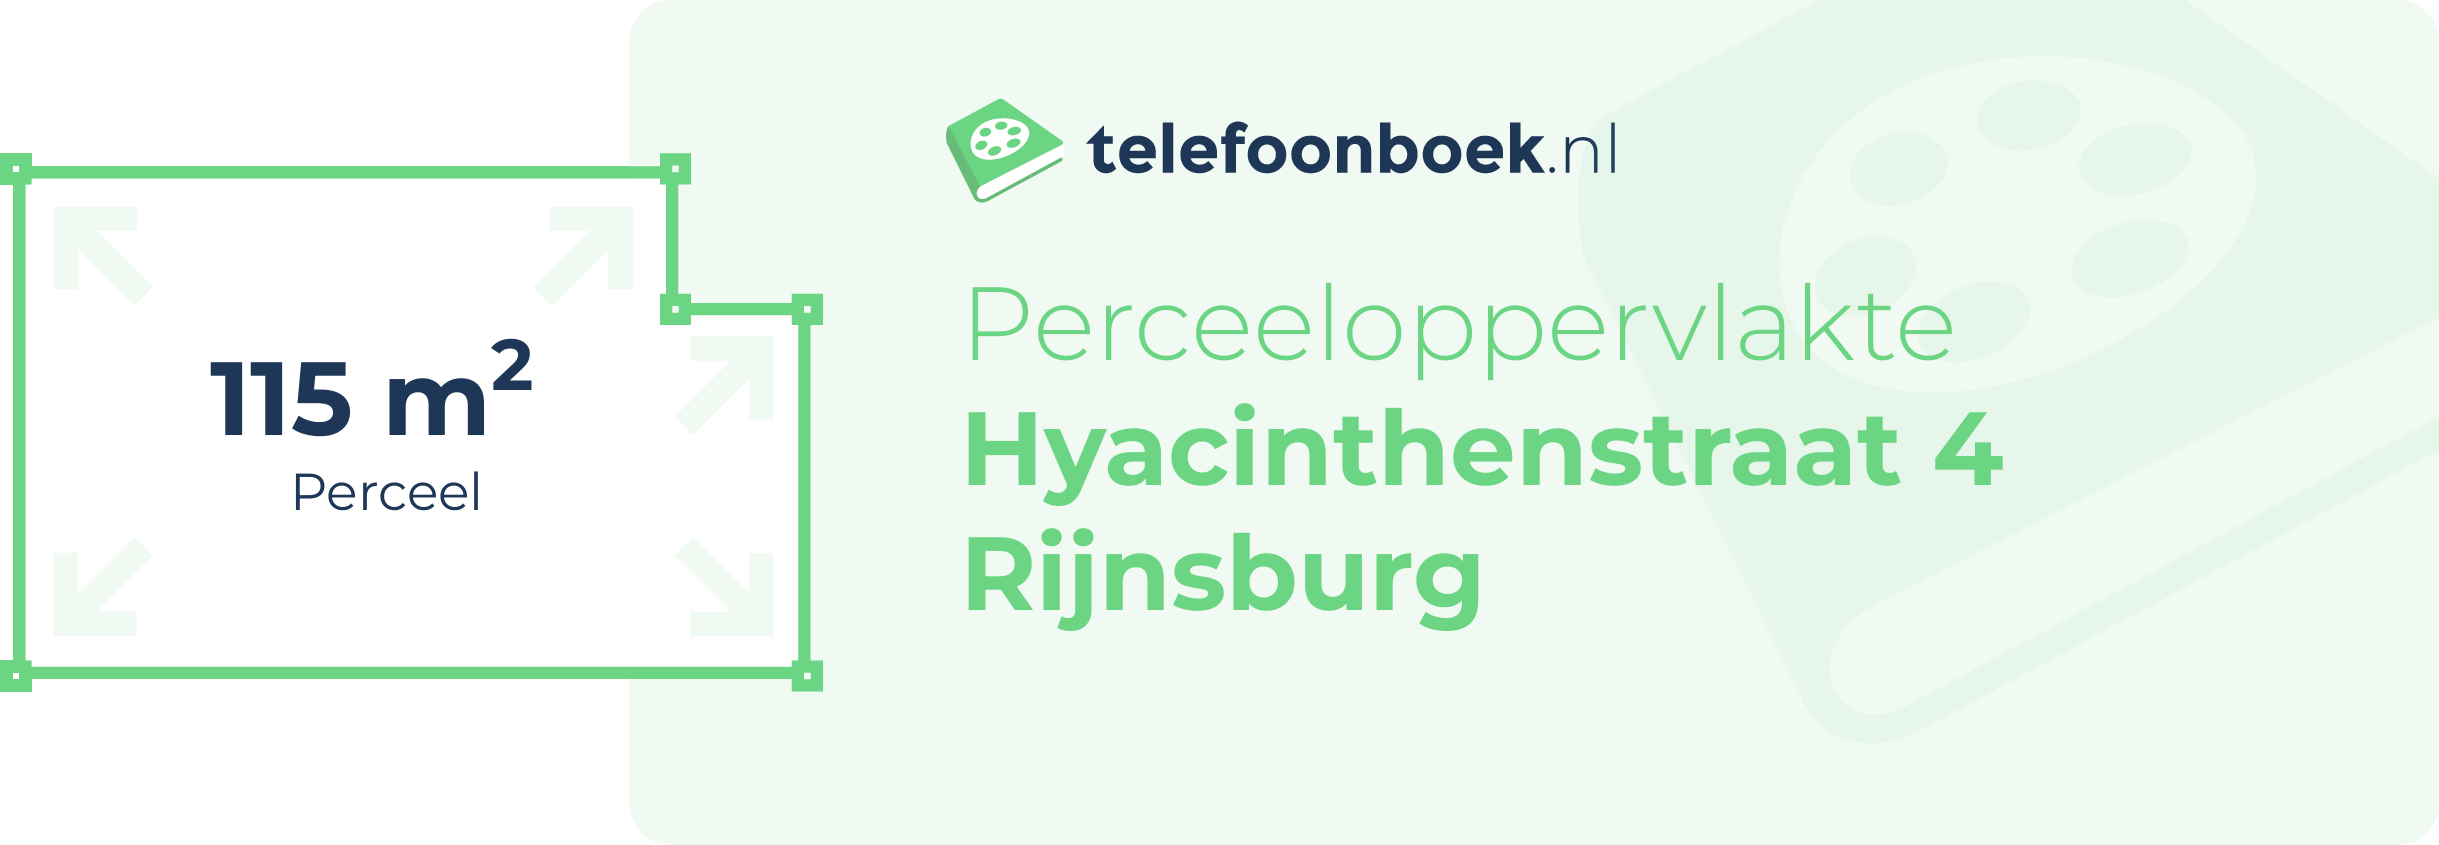 Perceeloppervlakte Hyacinthenstraat 4 Rijnsburg